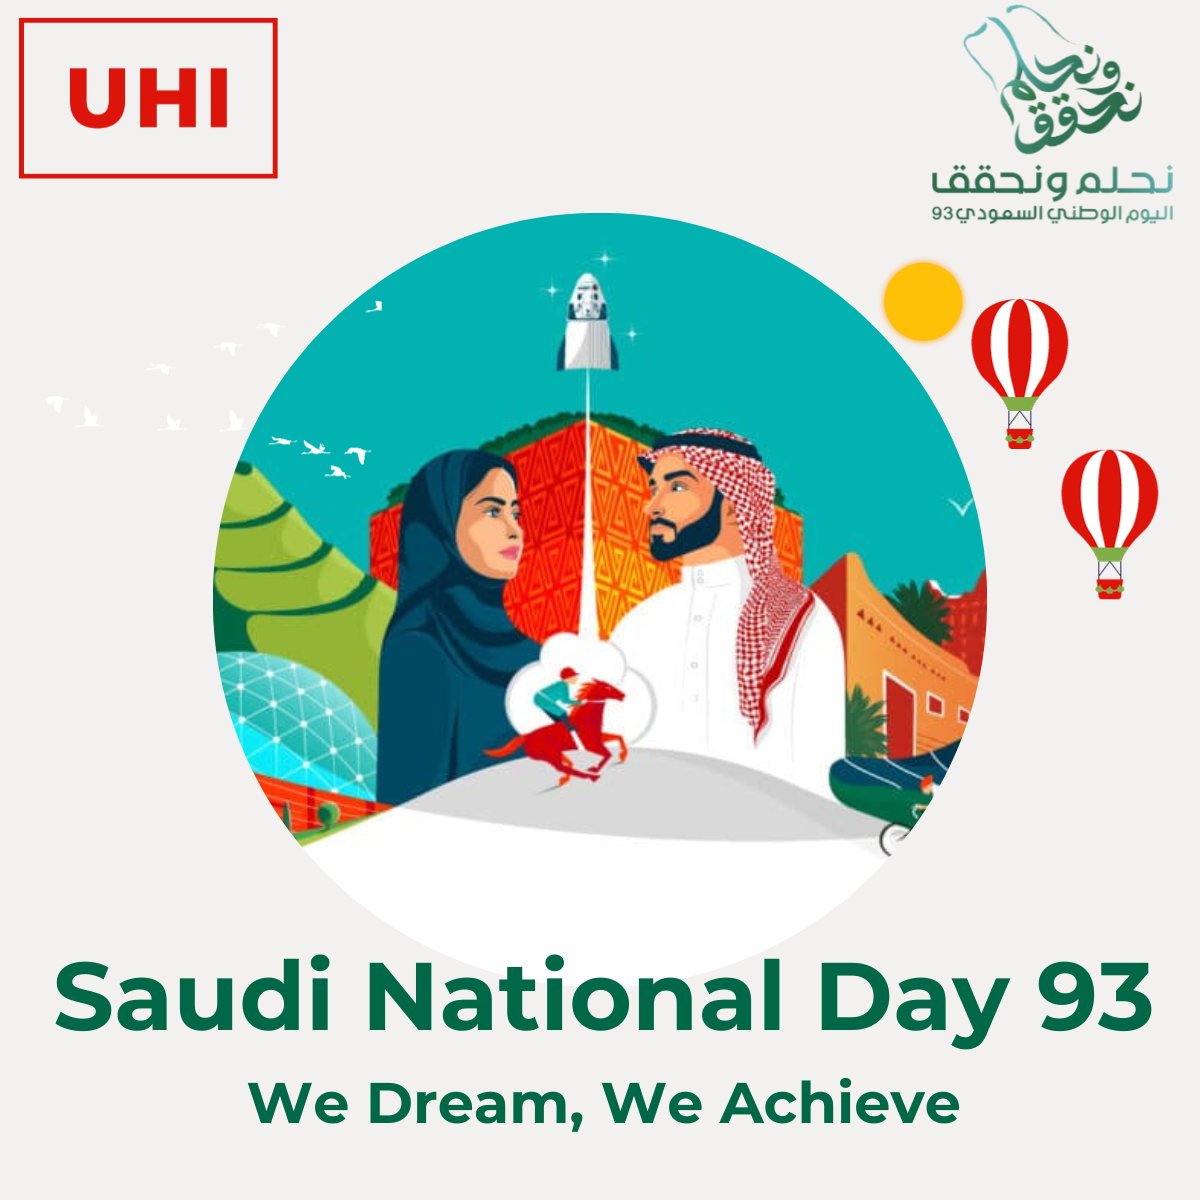 Wishing you a Happy National Saudi Day!

From your favourite b2b travel partner UHI.

💚 عيد وطني سعيد

#saudiarabia #jeddah #travel #travelagent #travelagents #b2b #b2btravel #UHI #WebBeds #gatewaytosaudi #uhitravel #saudinationalday #saudiarabia93